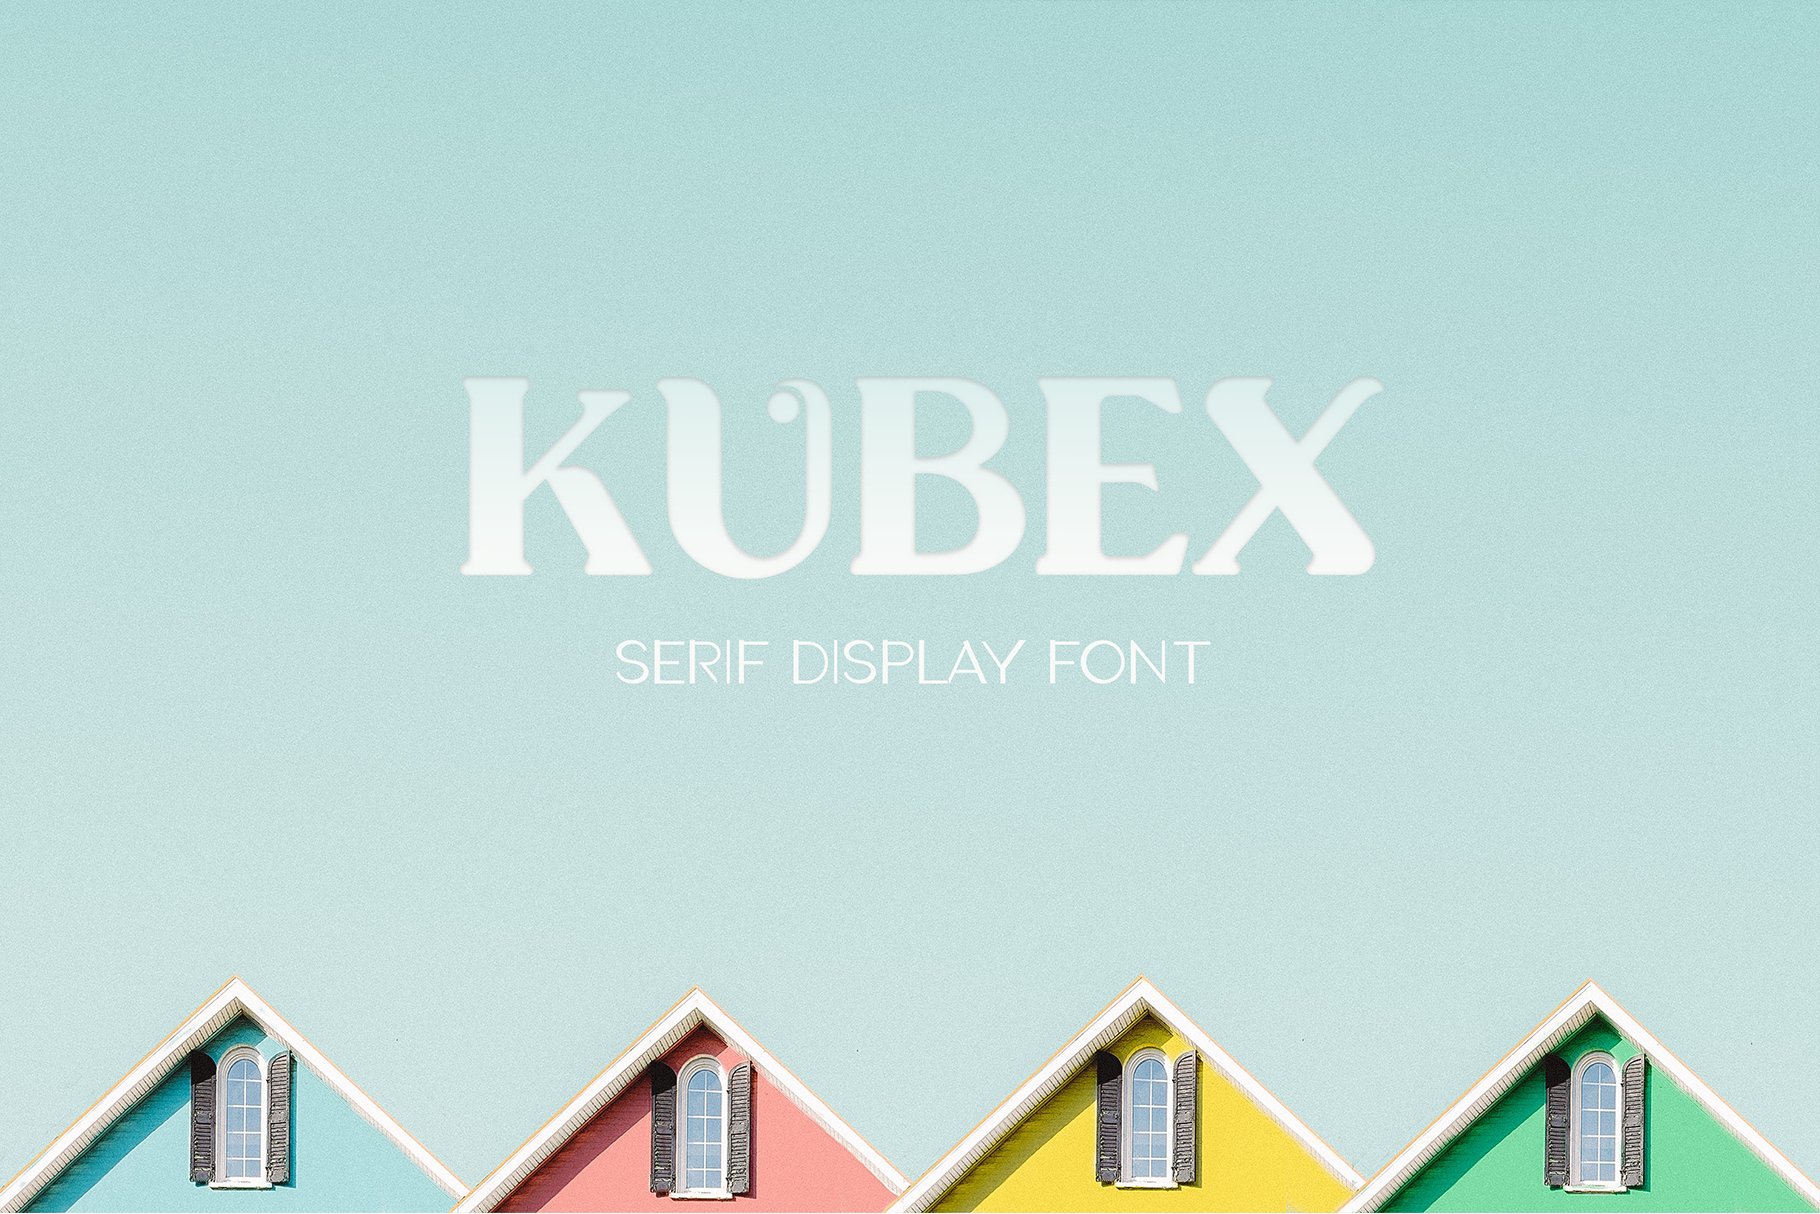 Kubex - Serif Display Font cover image.